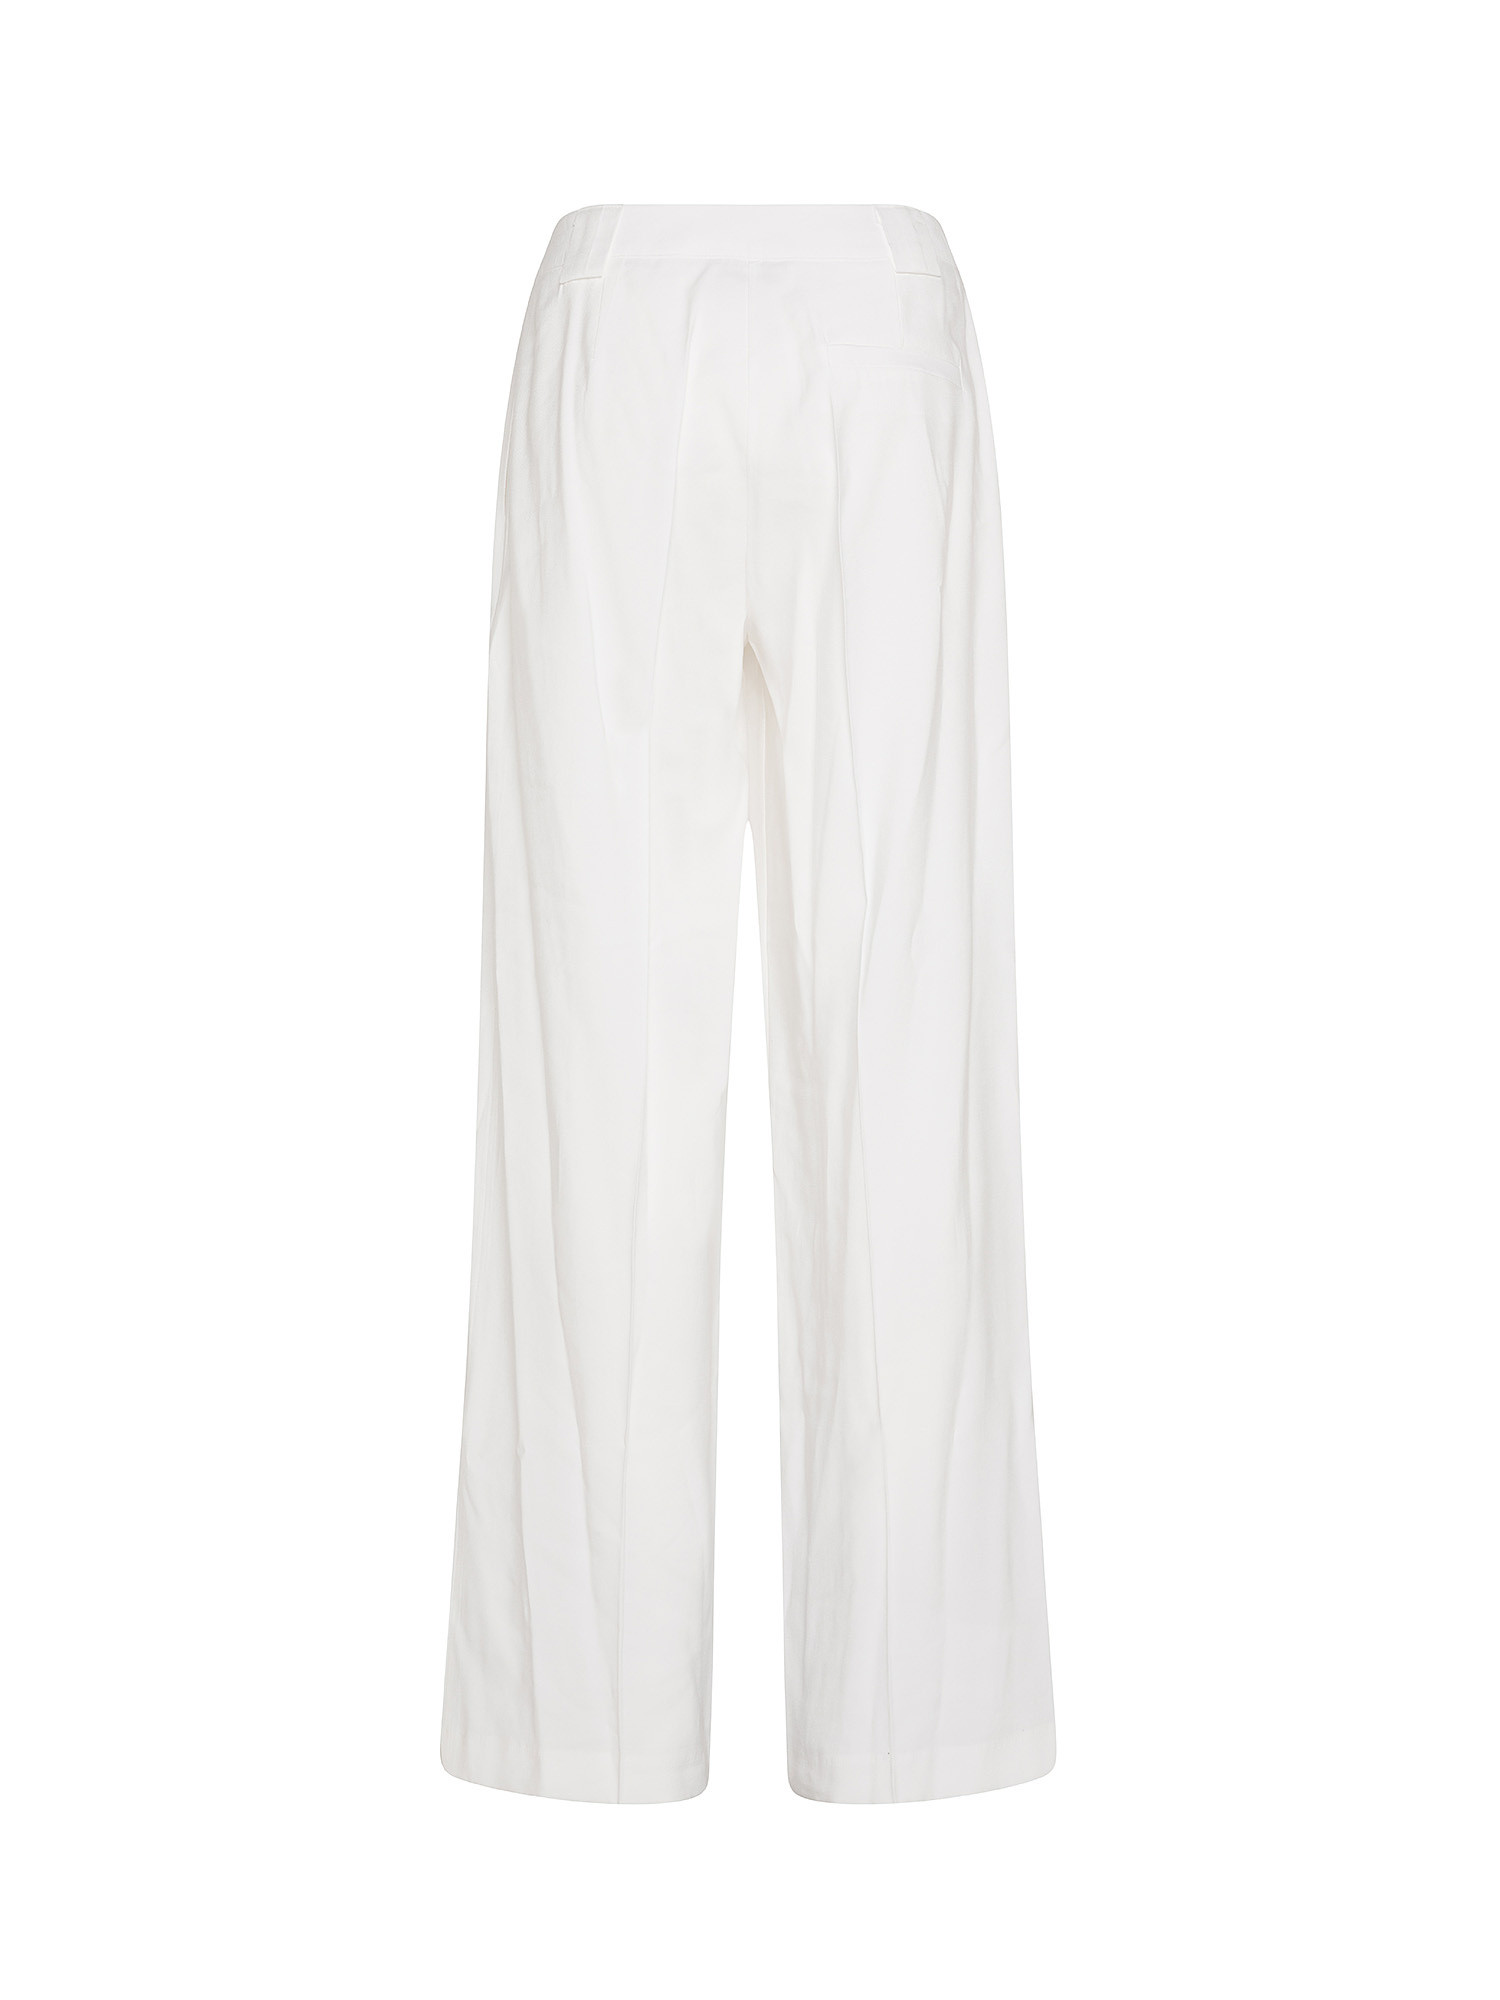 Pantalone, Bianco, large image number 1